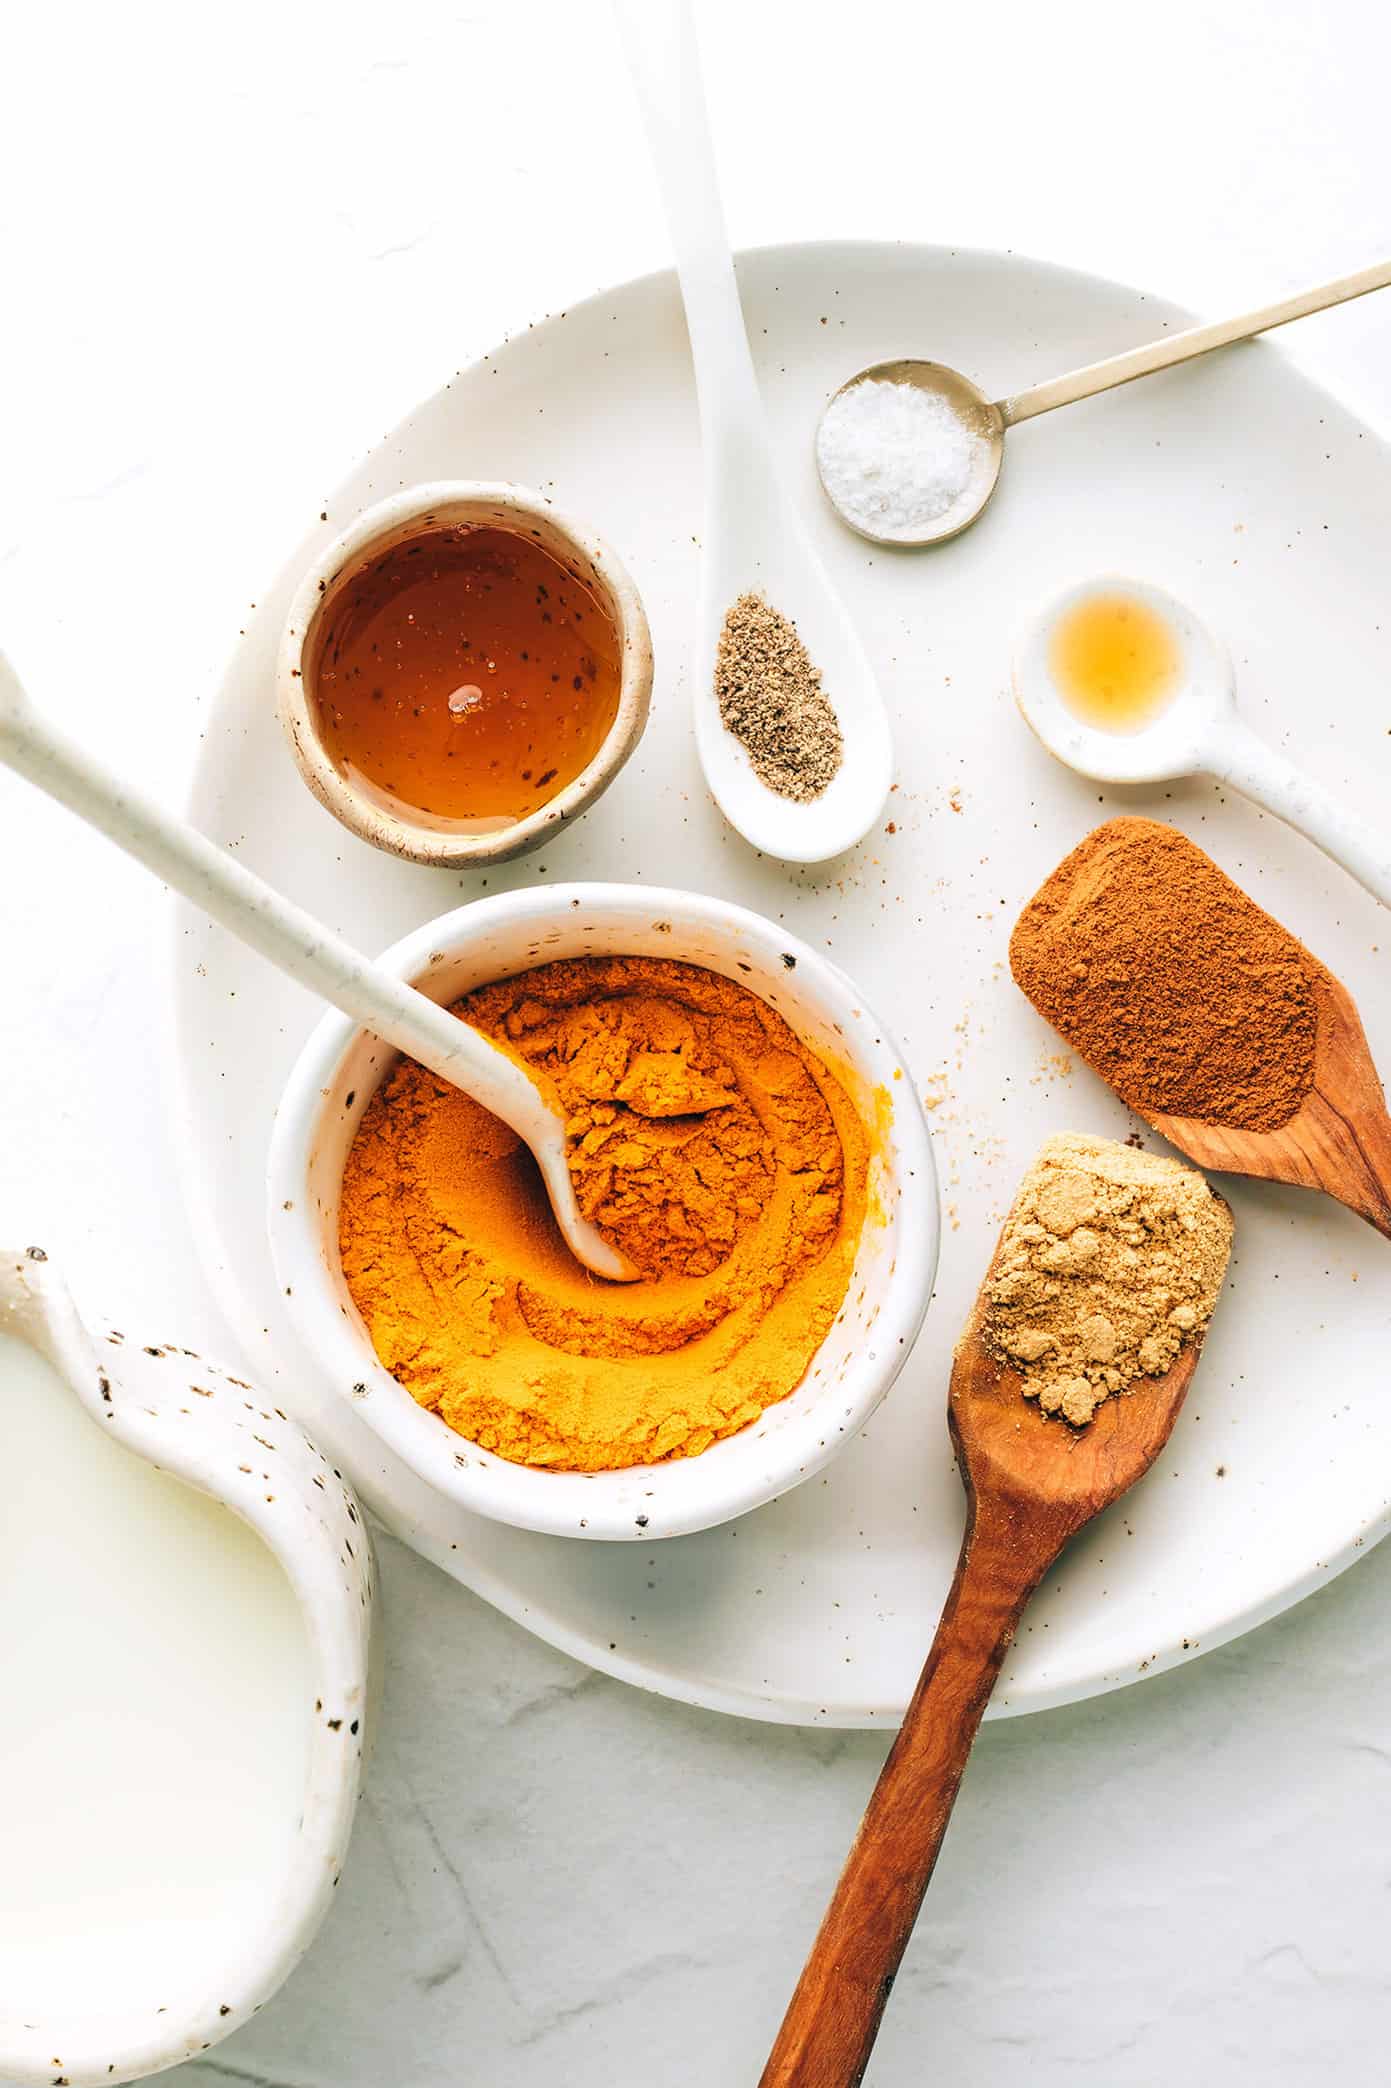 Homemade Golden Milk Spice Mix ⋆ Easy DIY Turmeric Latte Spice Blend!